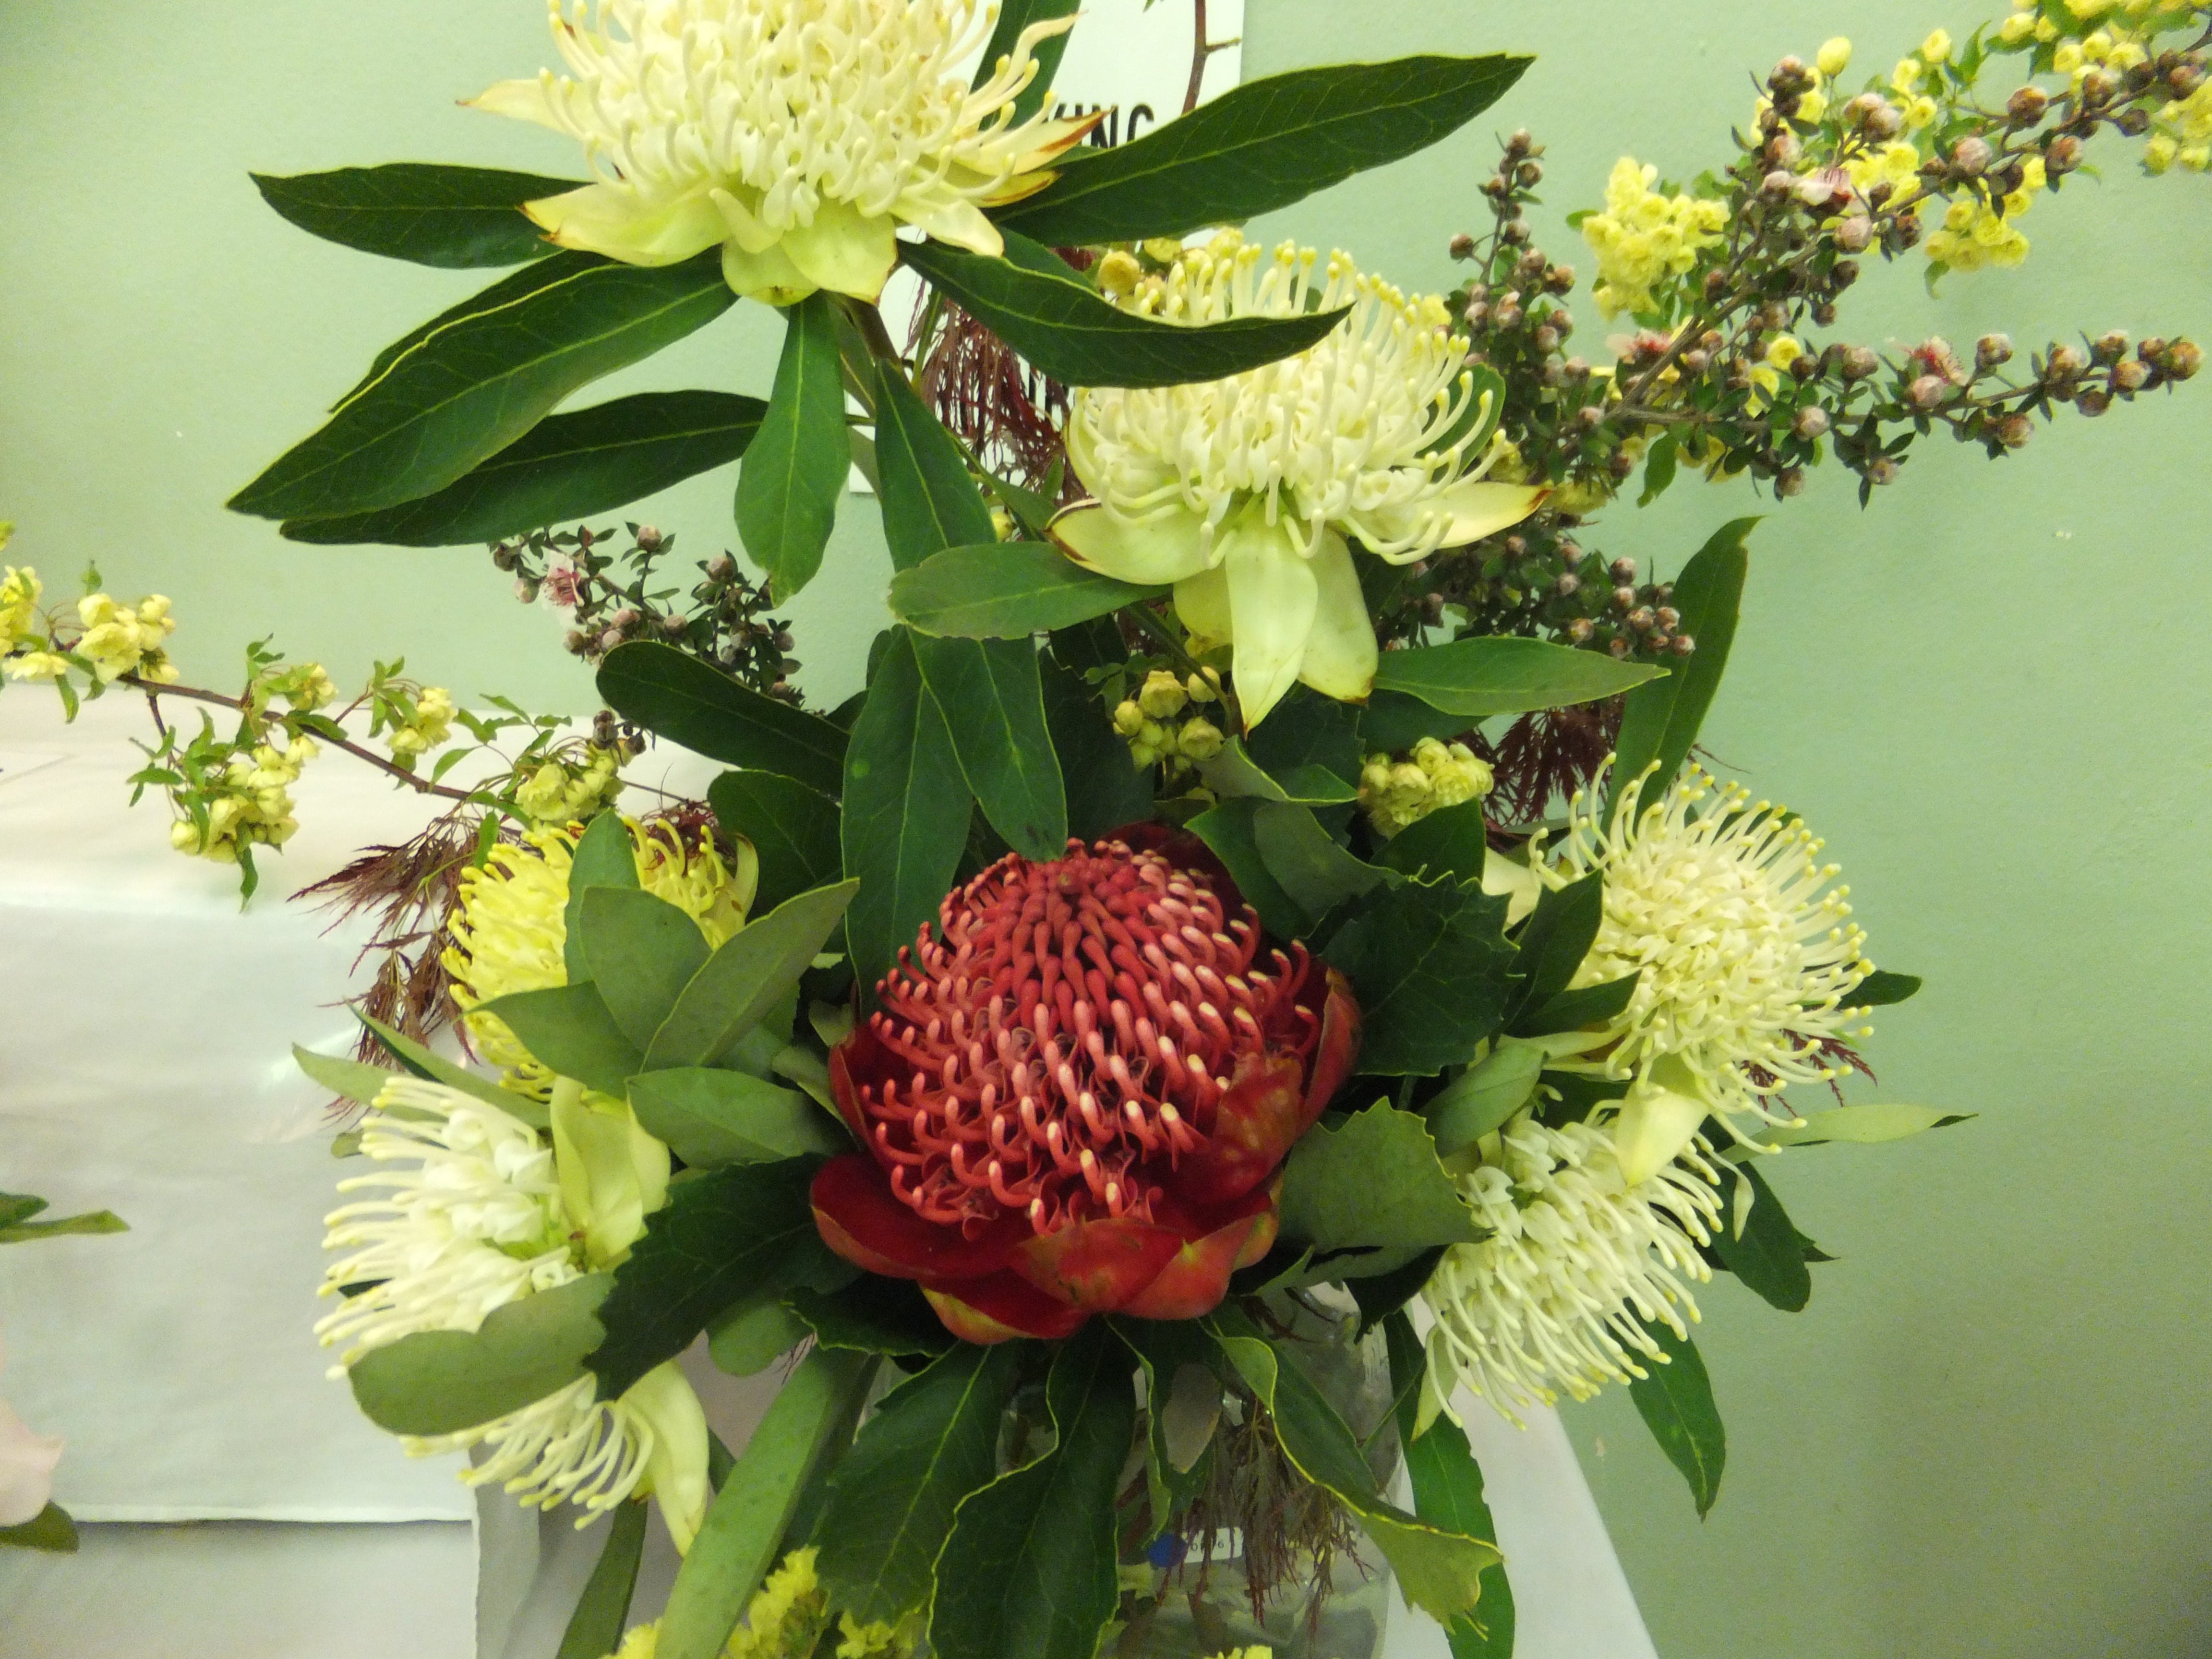 Blackheath Flower and Craft Show - Broome Tourism